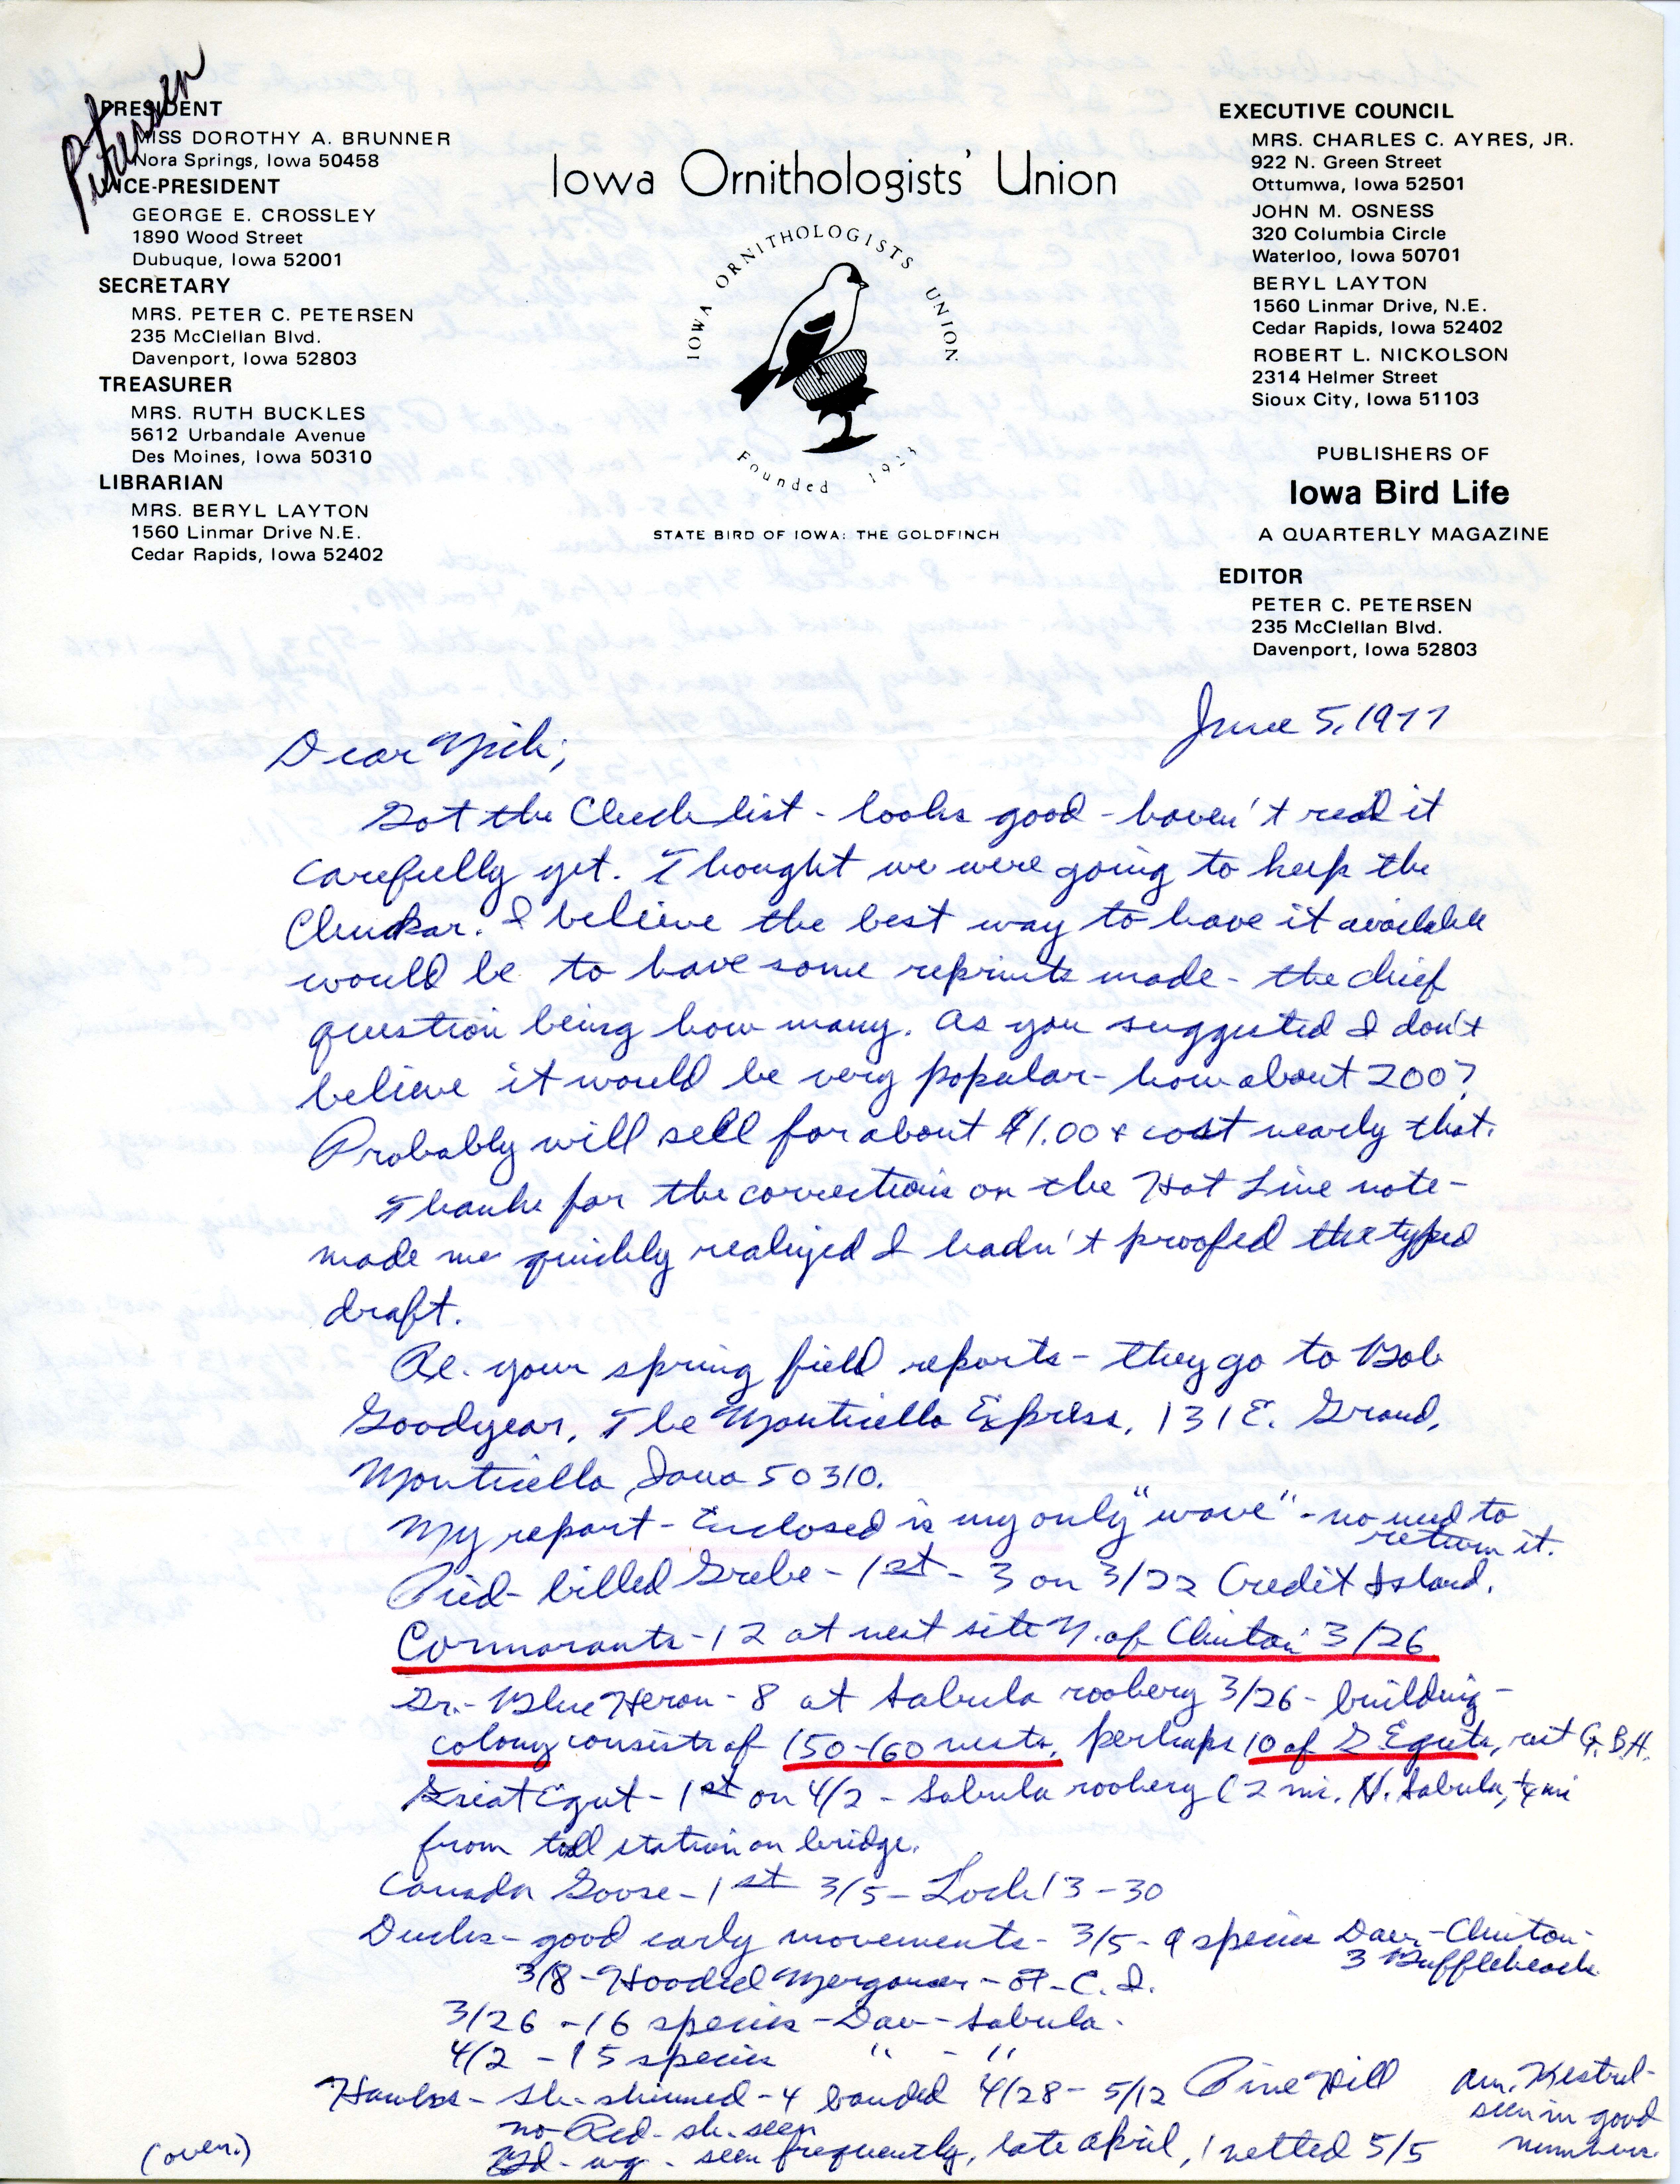 Peter C. Petersen letter to Nicholas S. Halmi reporting spring 1977 bird observations, June 5, 1977